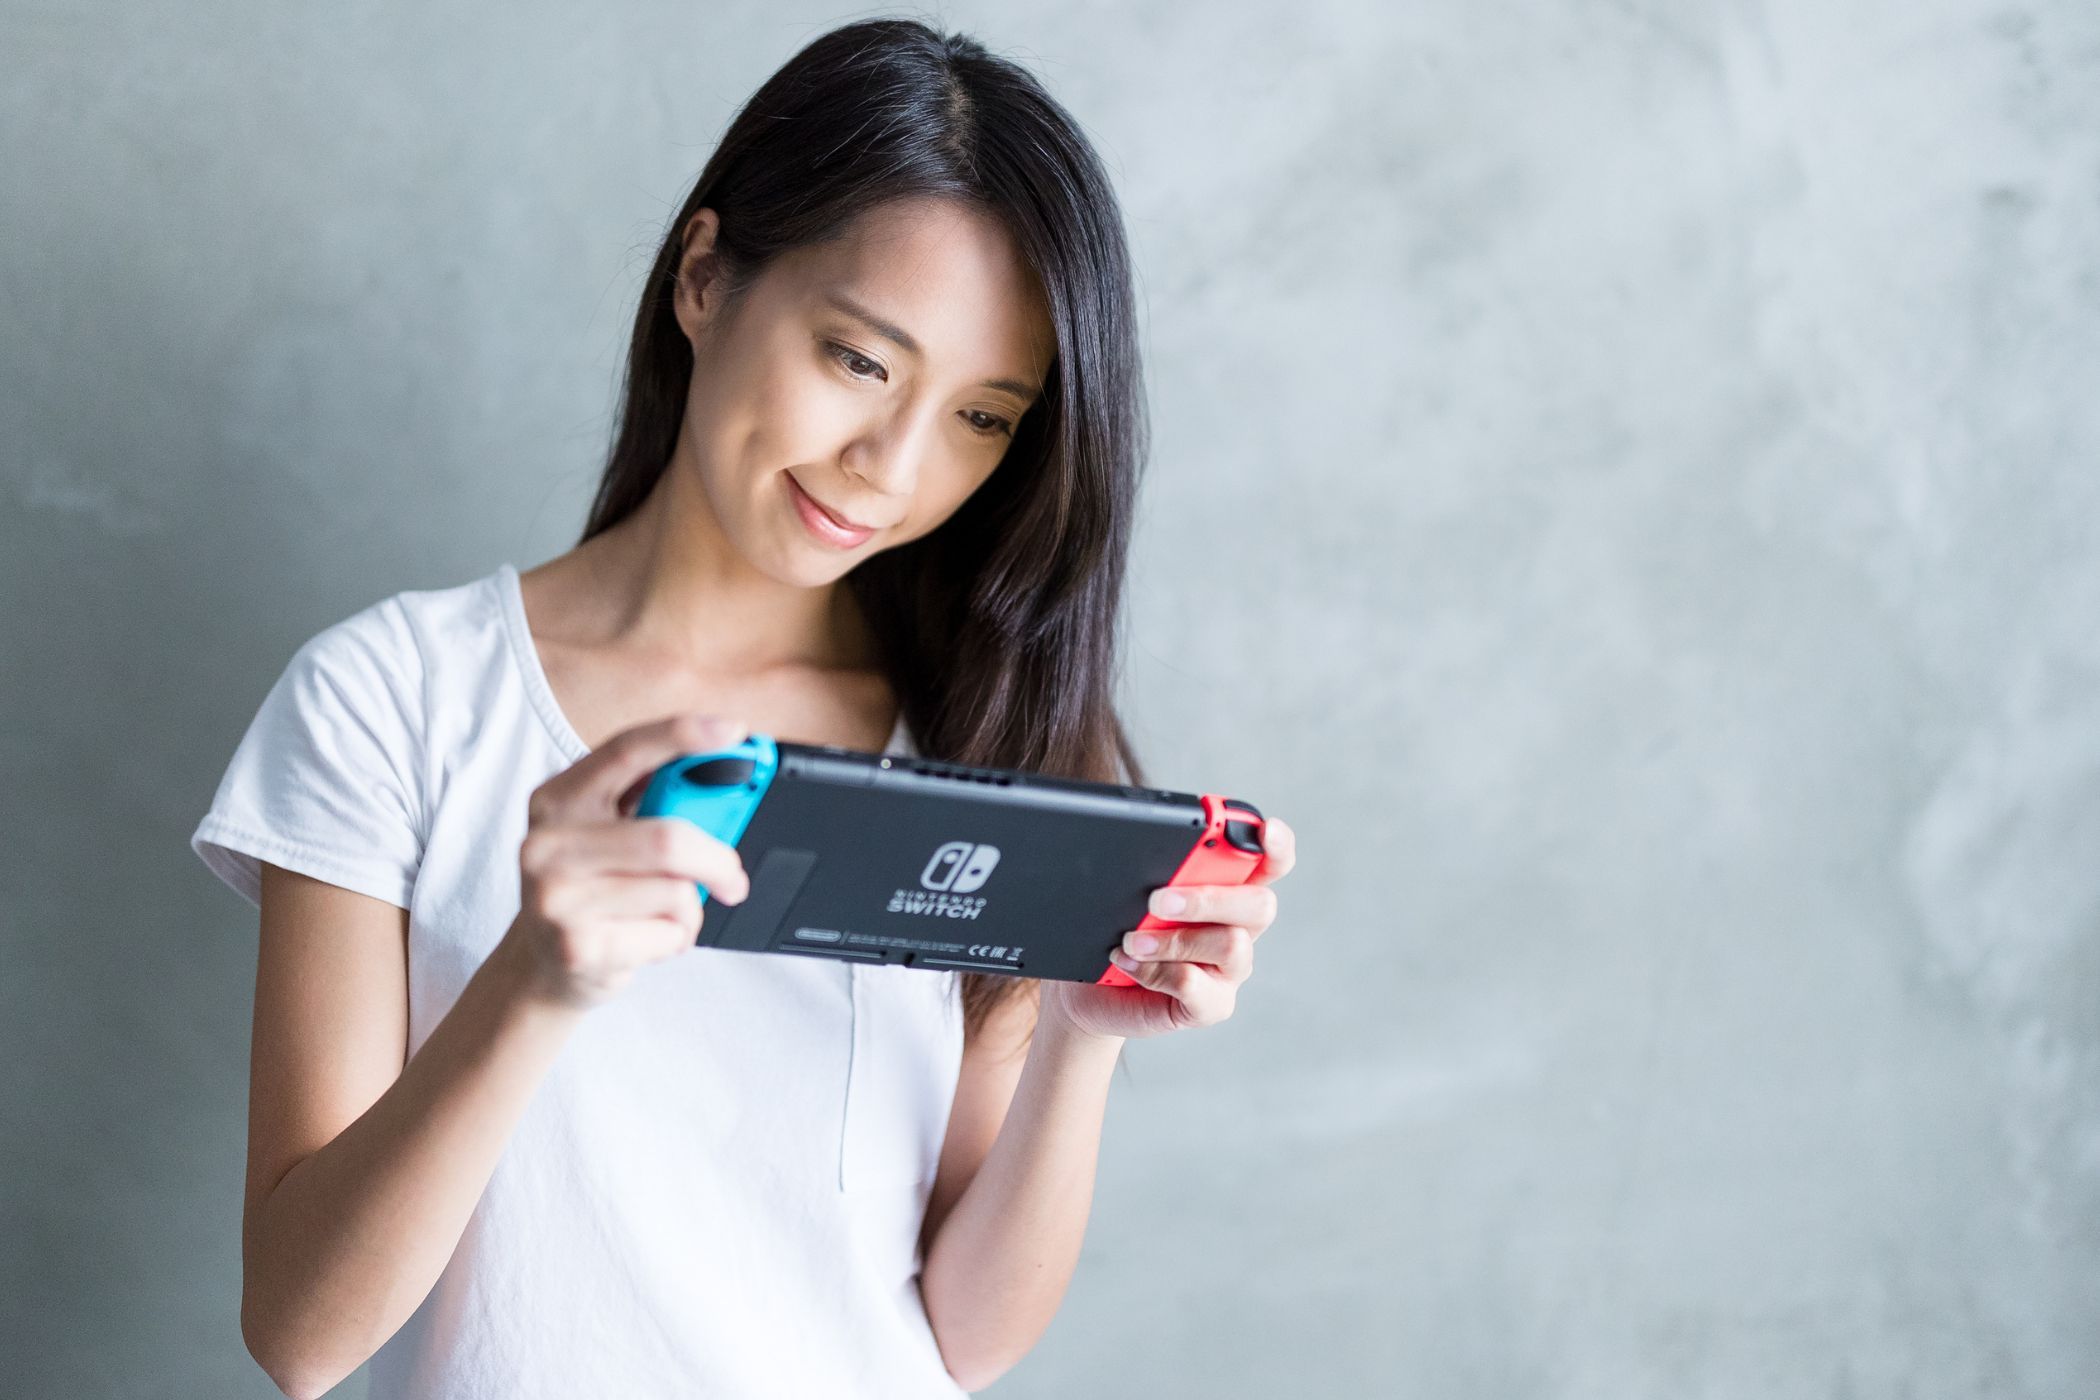 6 Reasons Why I Regret Buying My Nintendo Switch